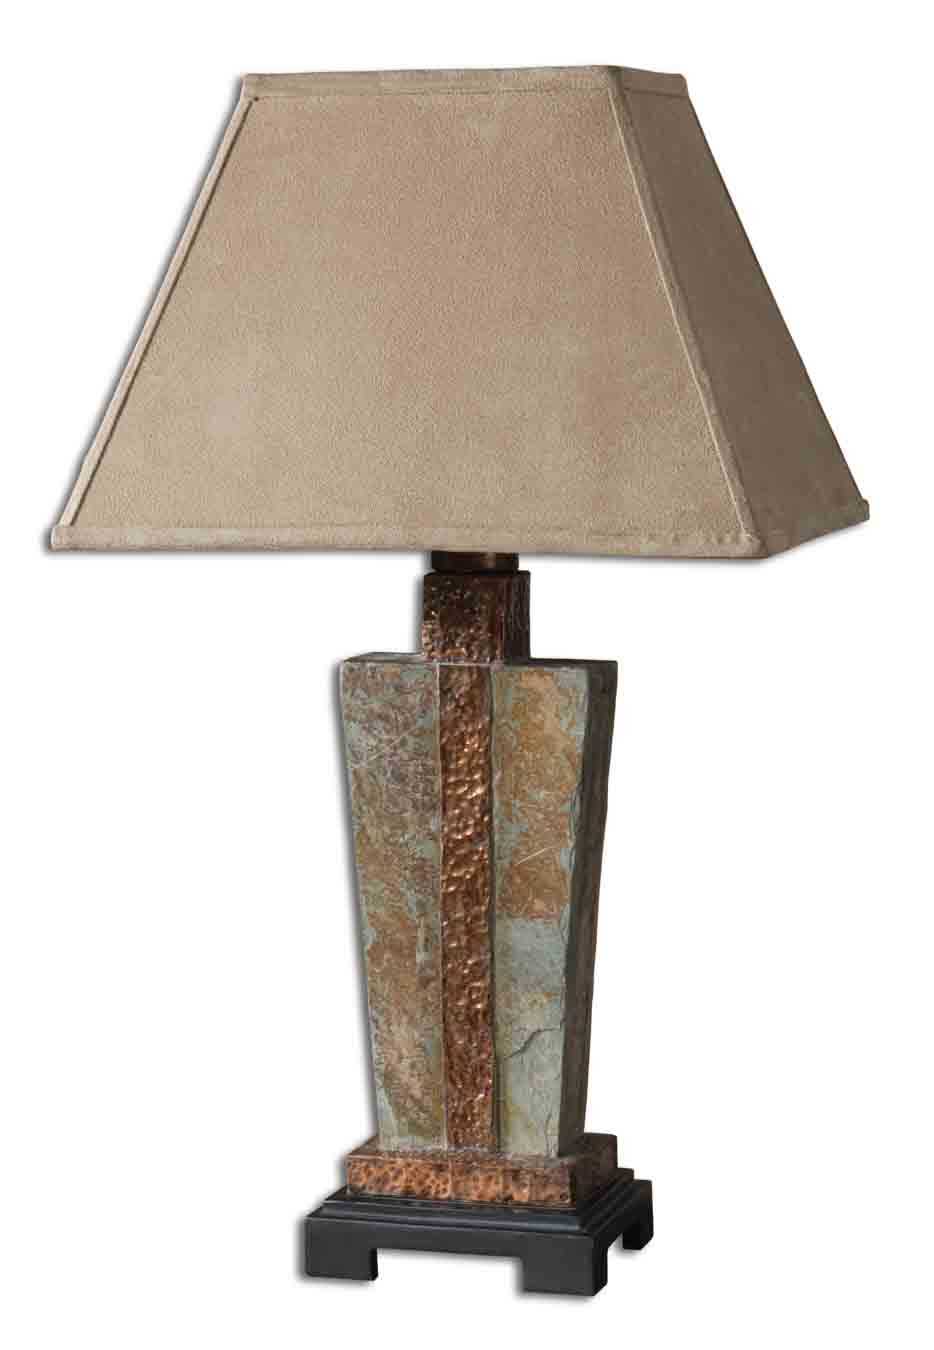 Лампа SLATE ACCENT LAMP 26322-1 Uttermost США